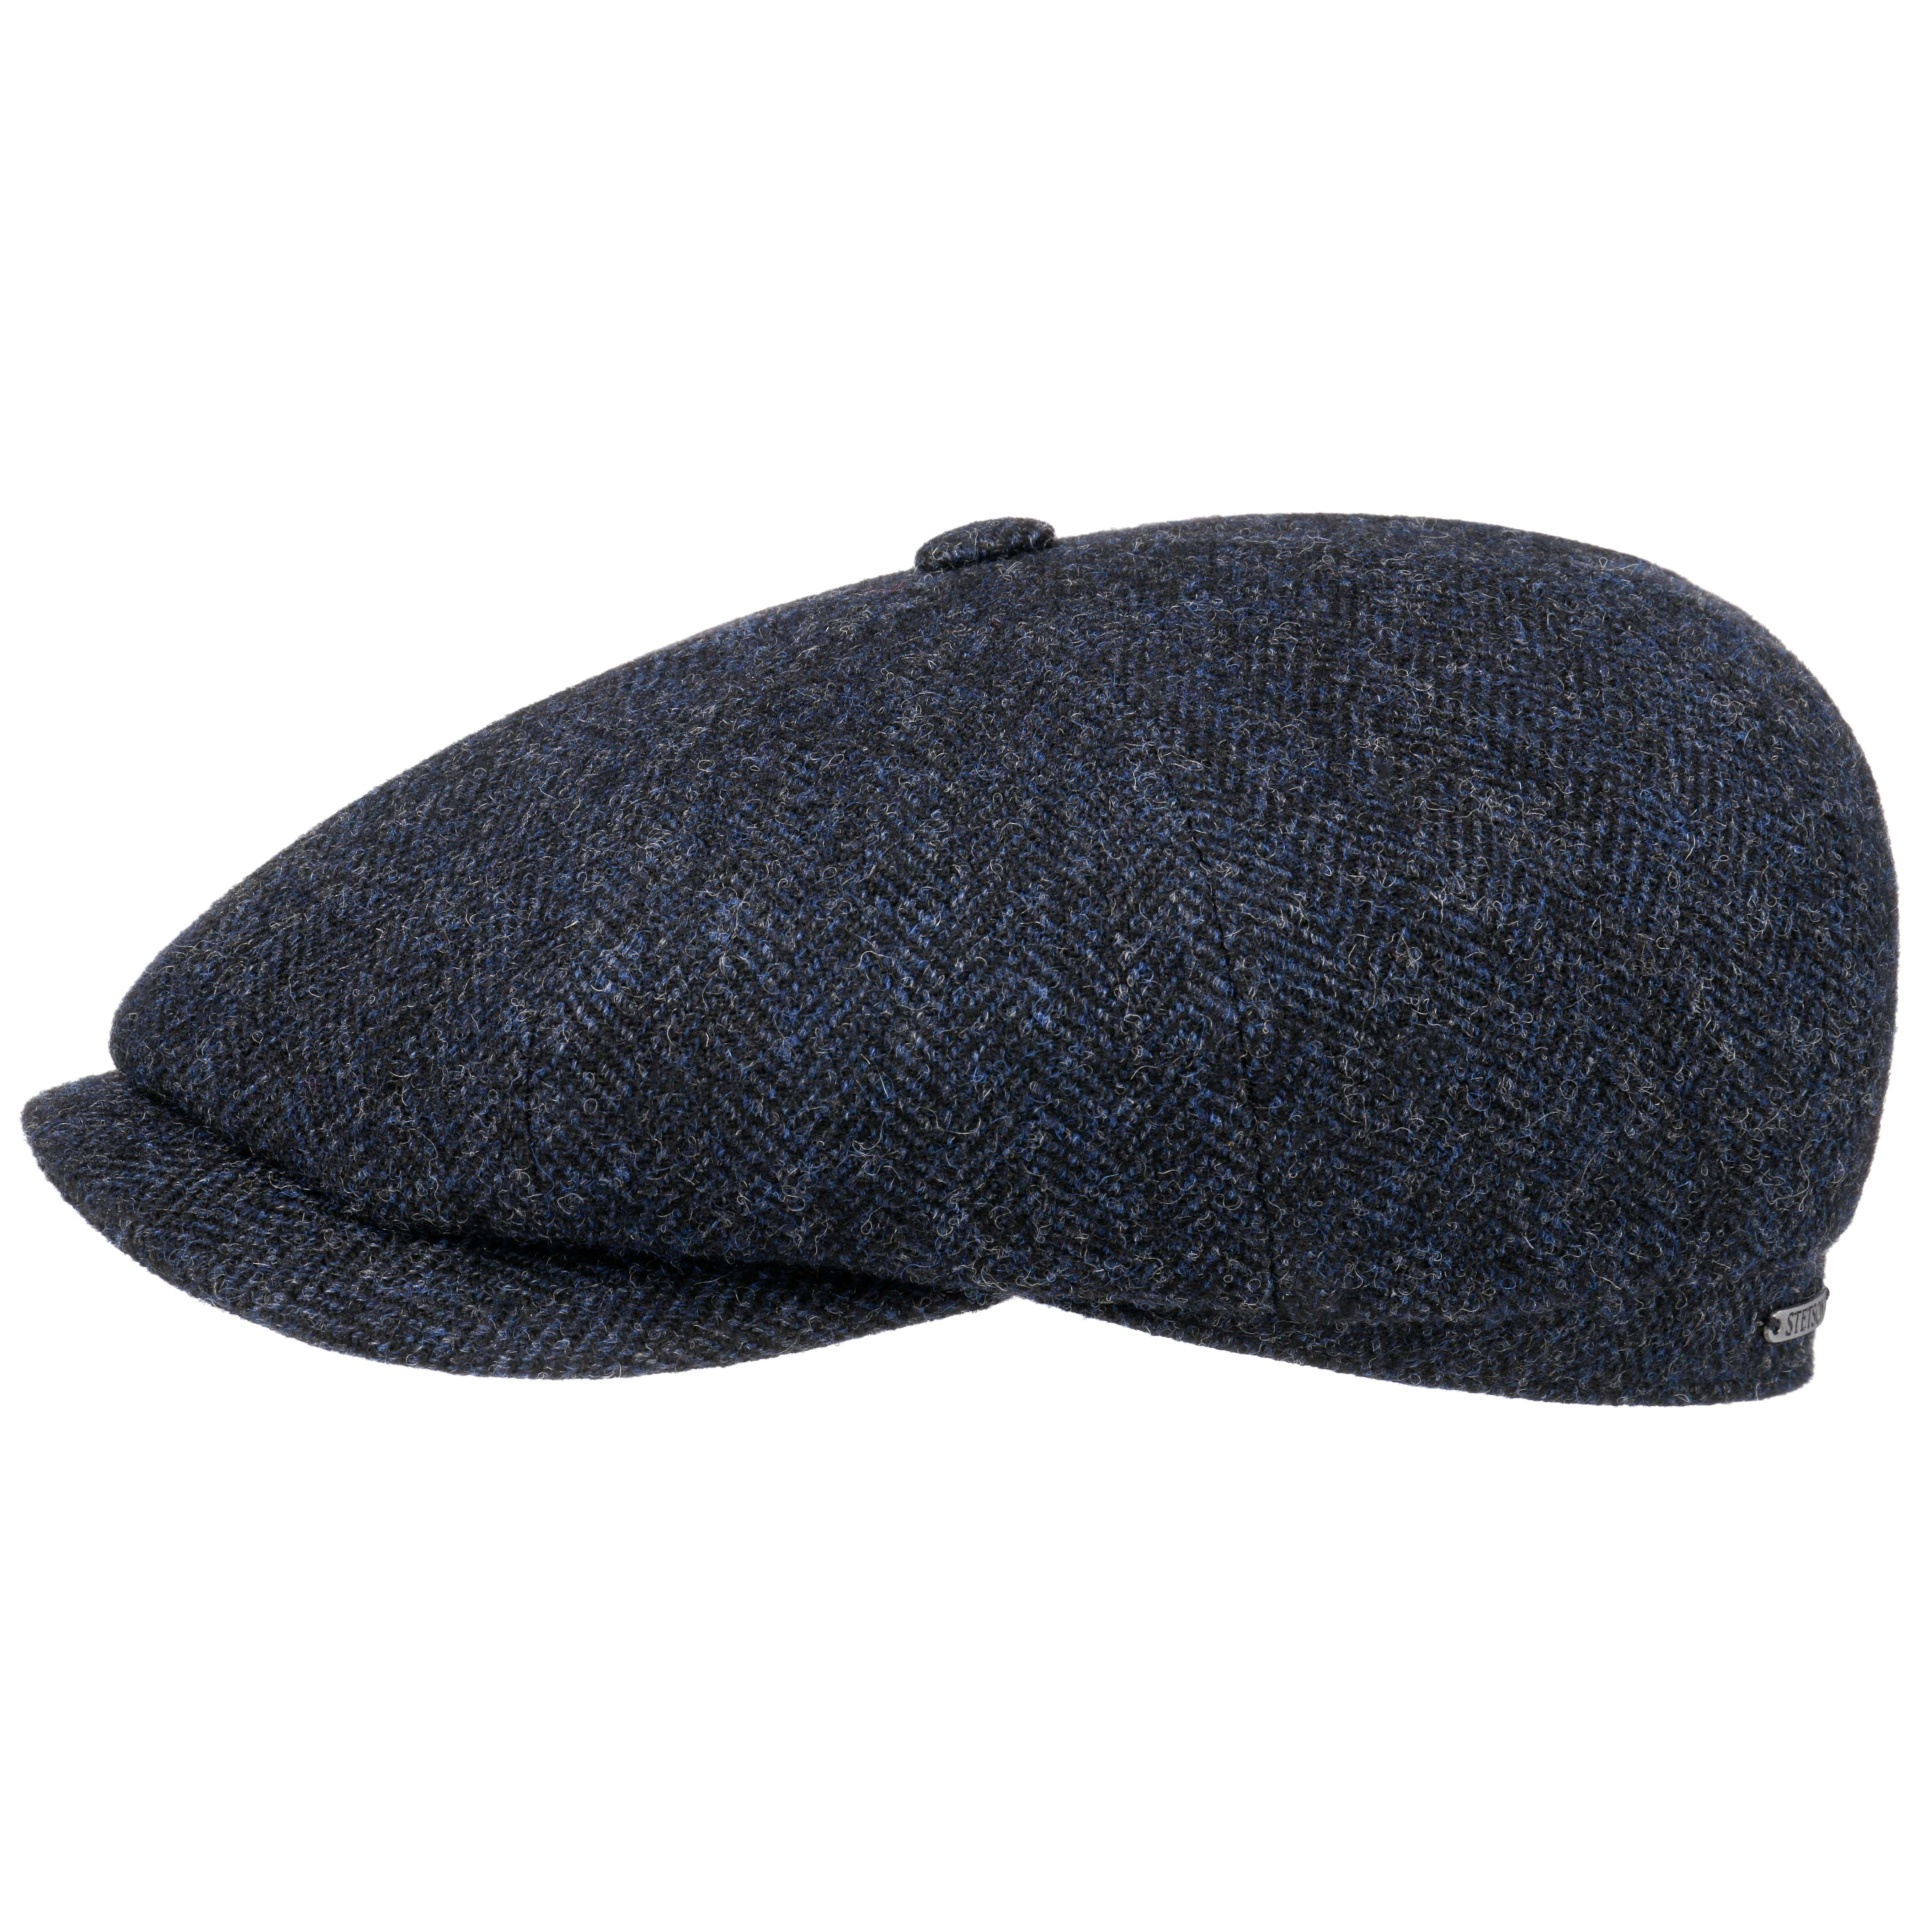 Stetson - Stetson Hatteras Wool Lacivert Balık Sırtı Yün Şapka